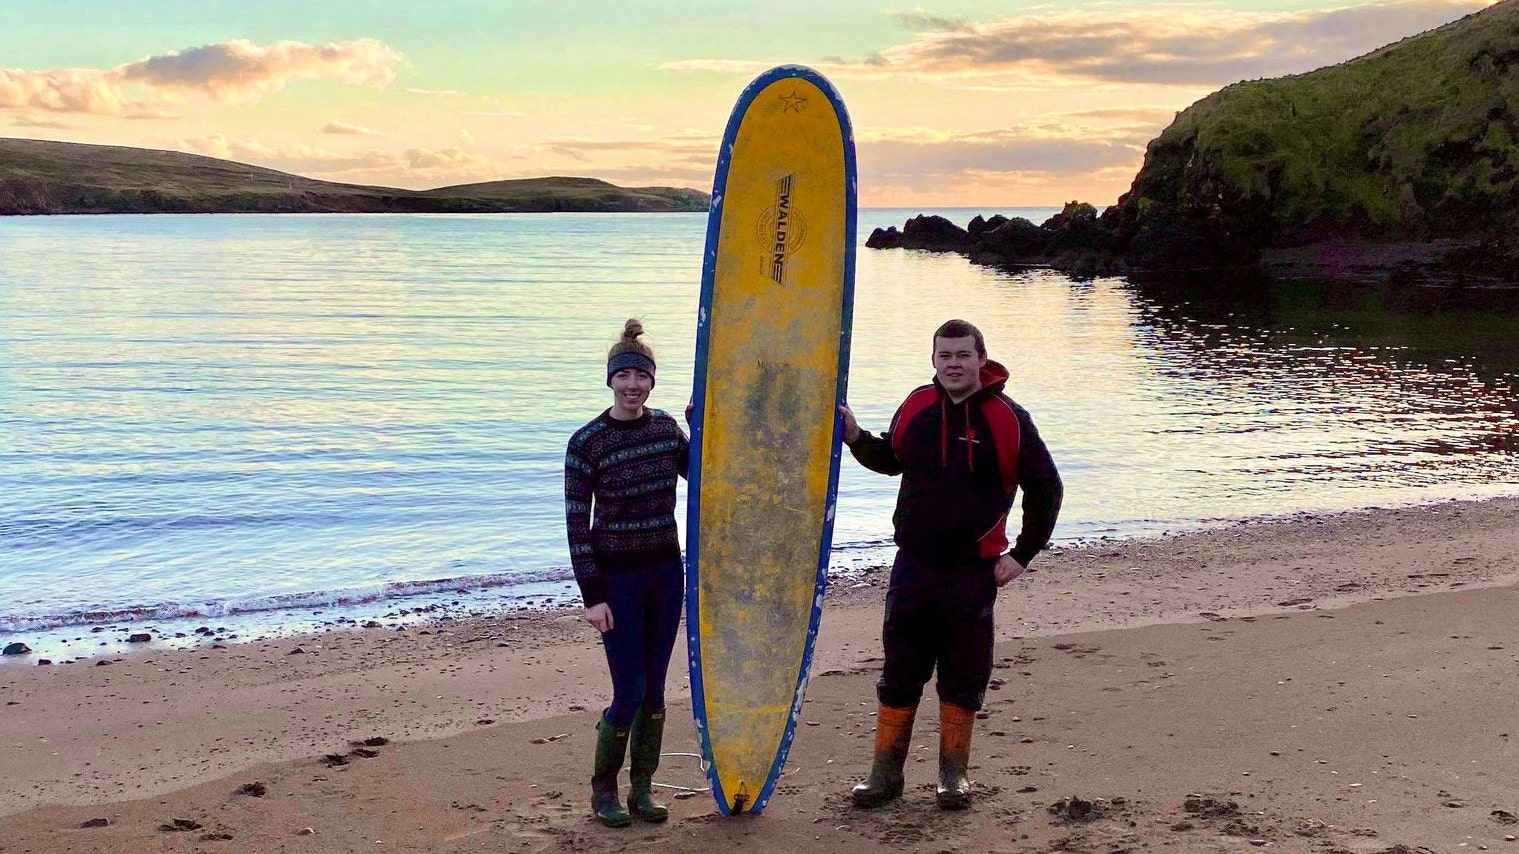 UK man's lost surfboard returned after drifting 400 miles to Shetland Islands